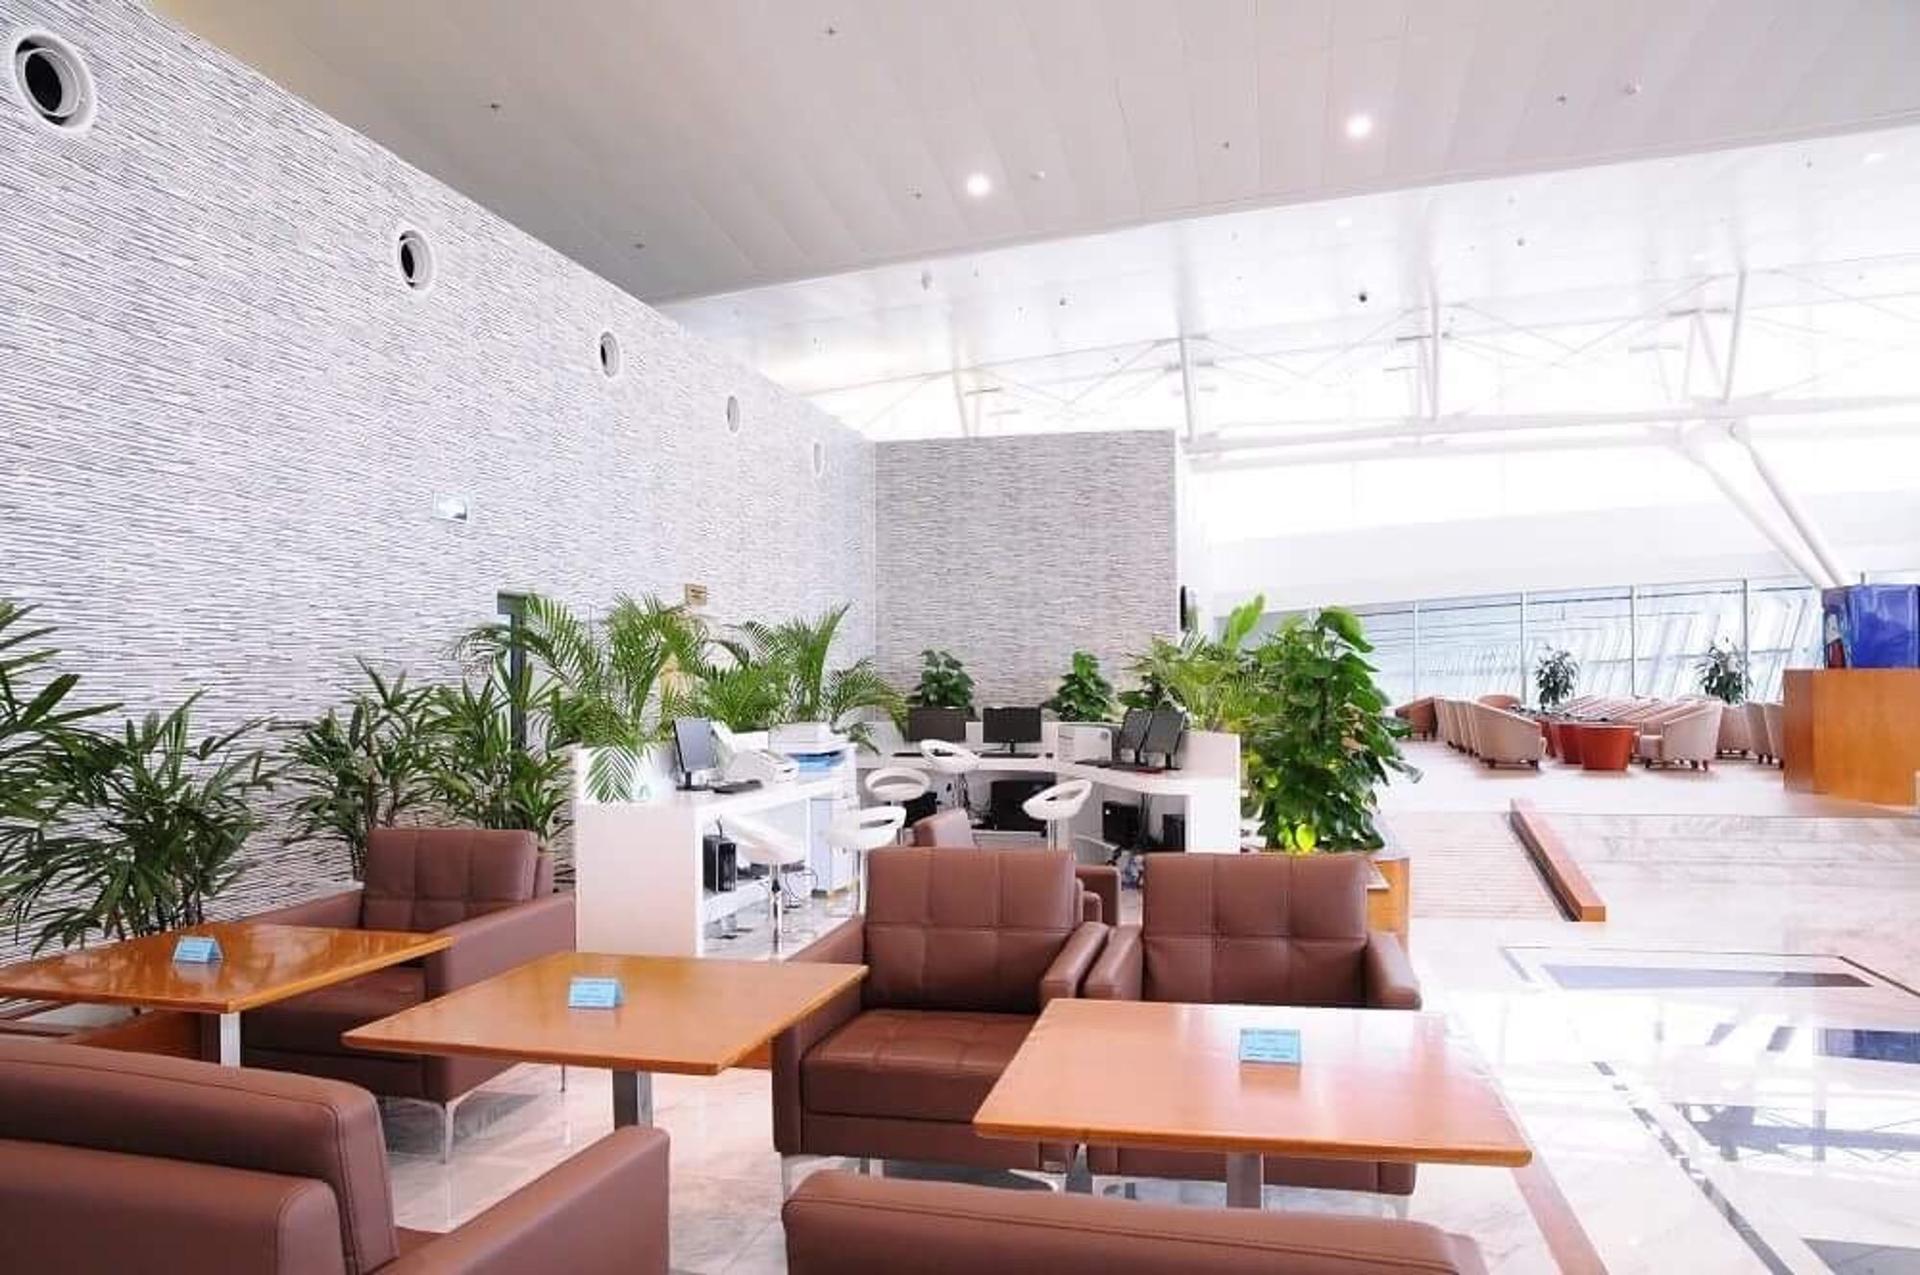 Noi Bai International Airport Business Lounge image 21 of 26